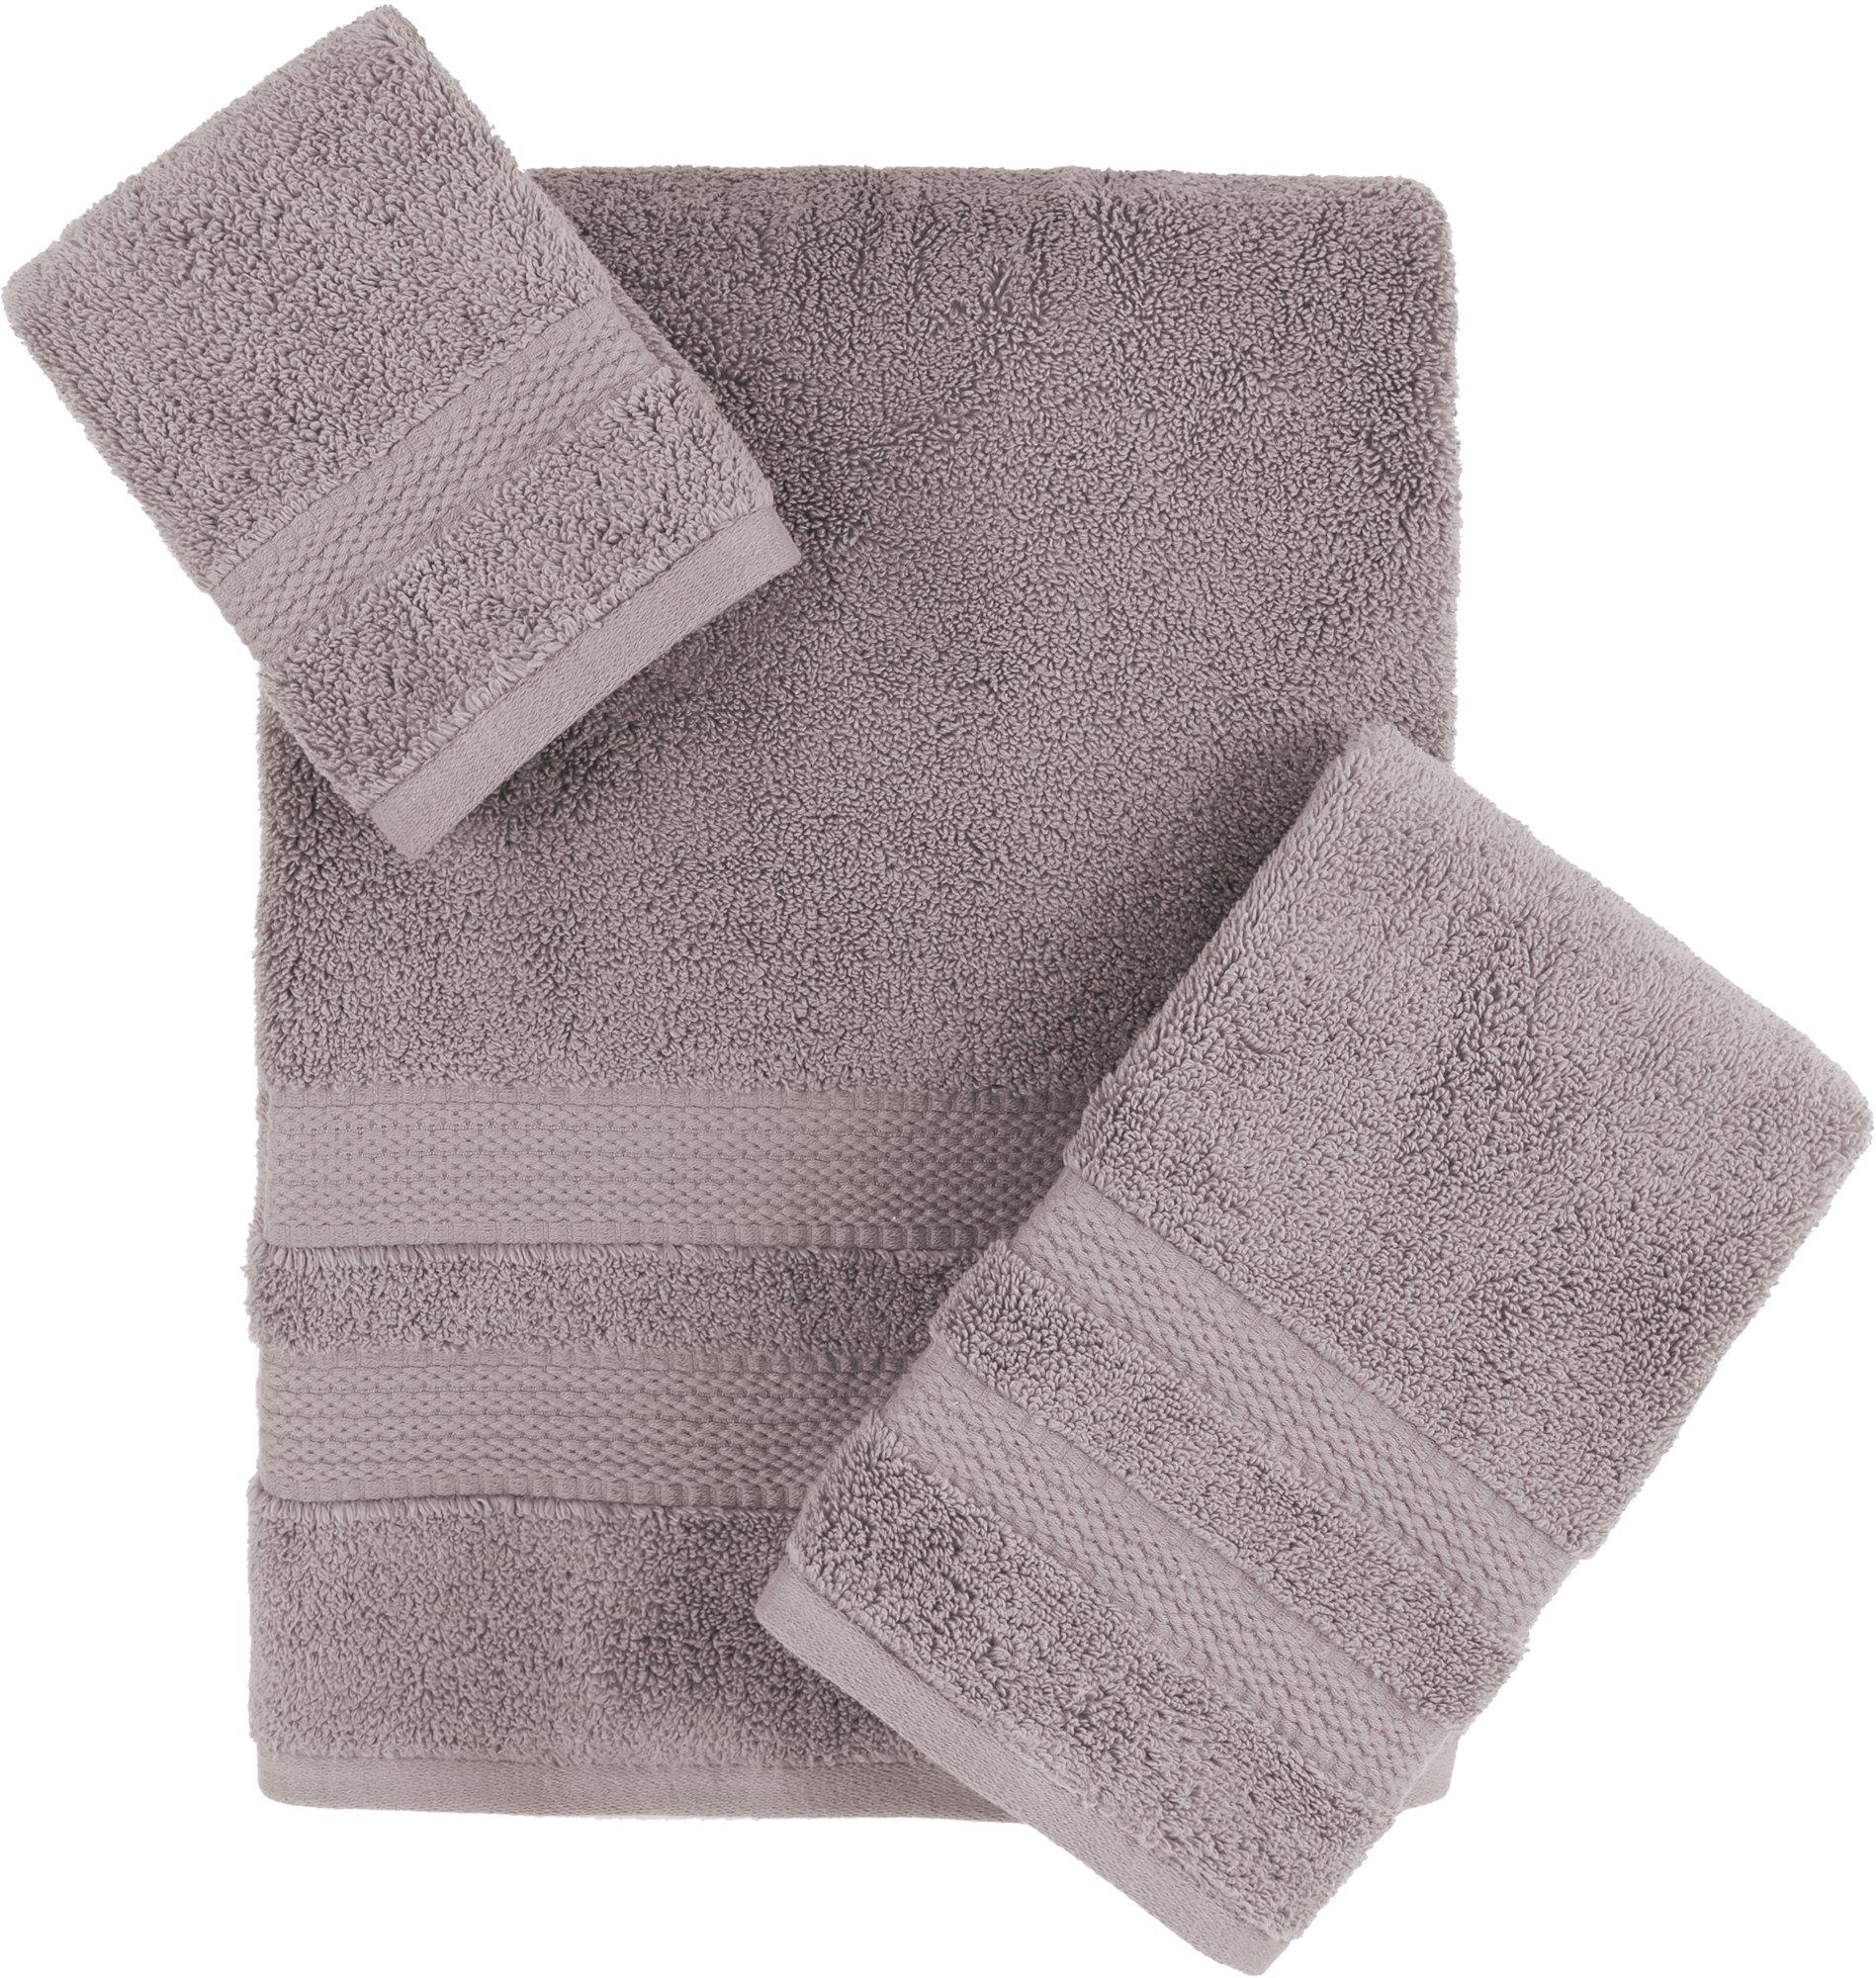 Caro Home Emma 6 Pc. Towel Set, Salina Beige And Grey, Bath Towels, Household